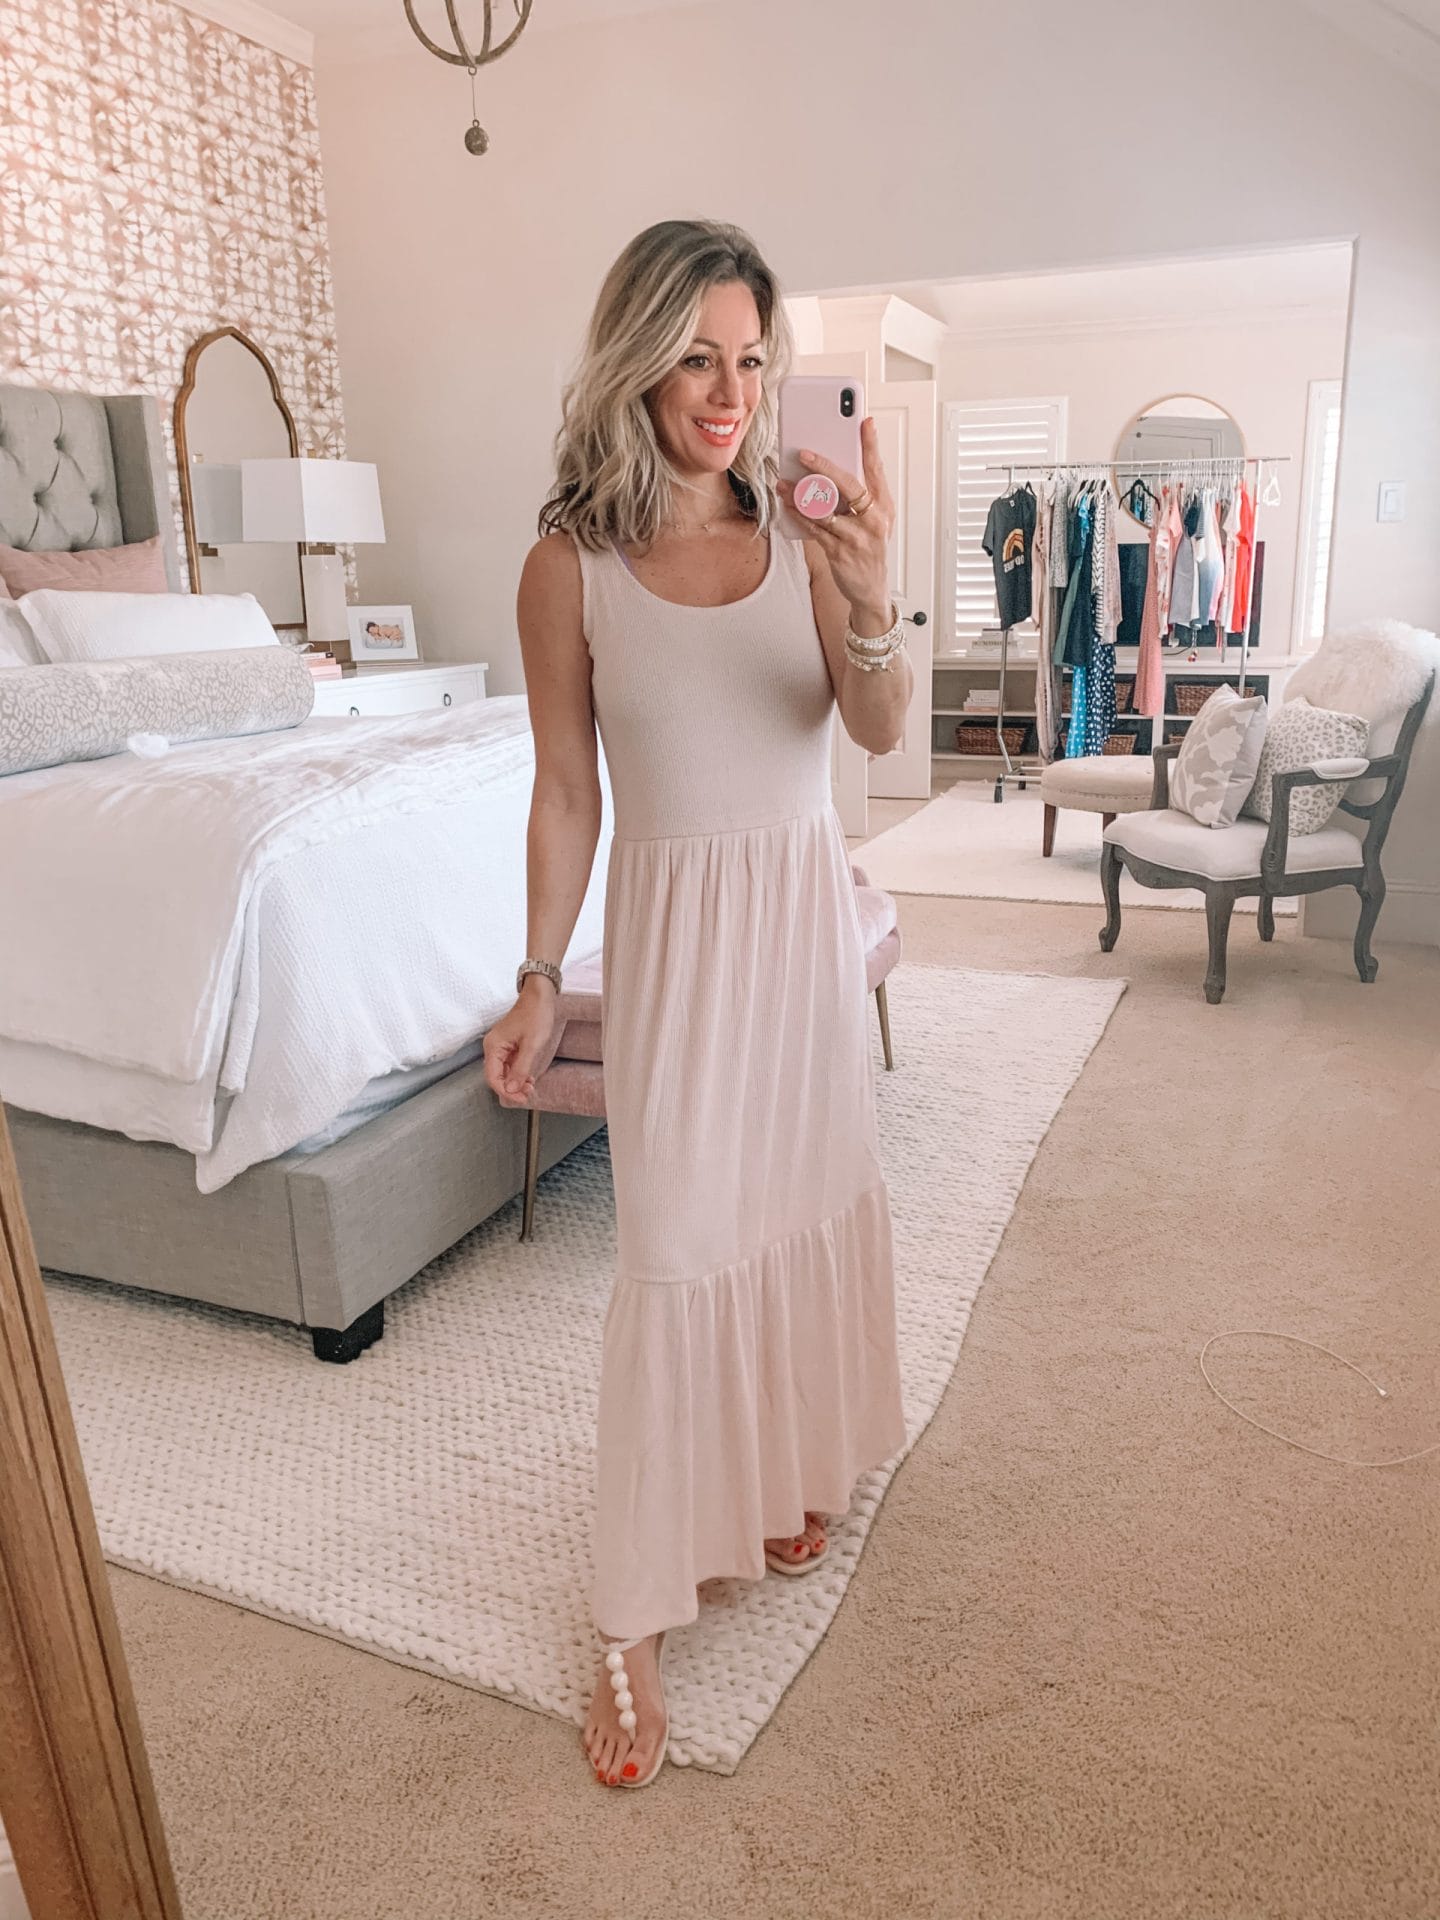 Amazon Fashion - Pink Tank Tiered Maxi Dress, White Sandals